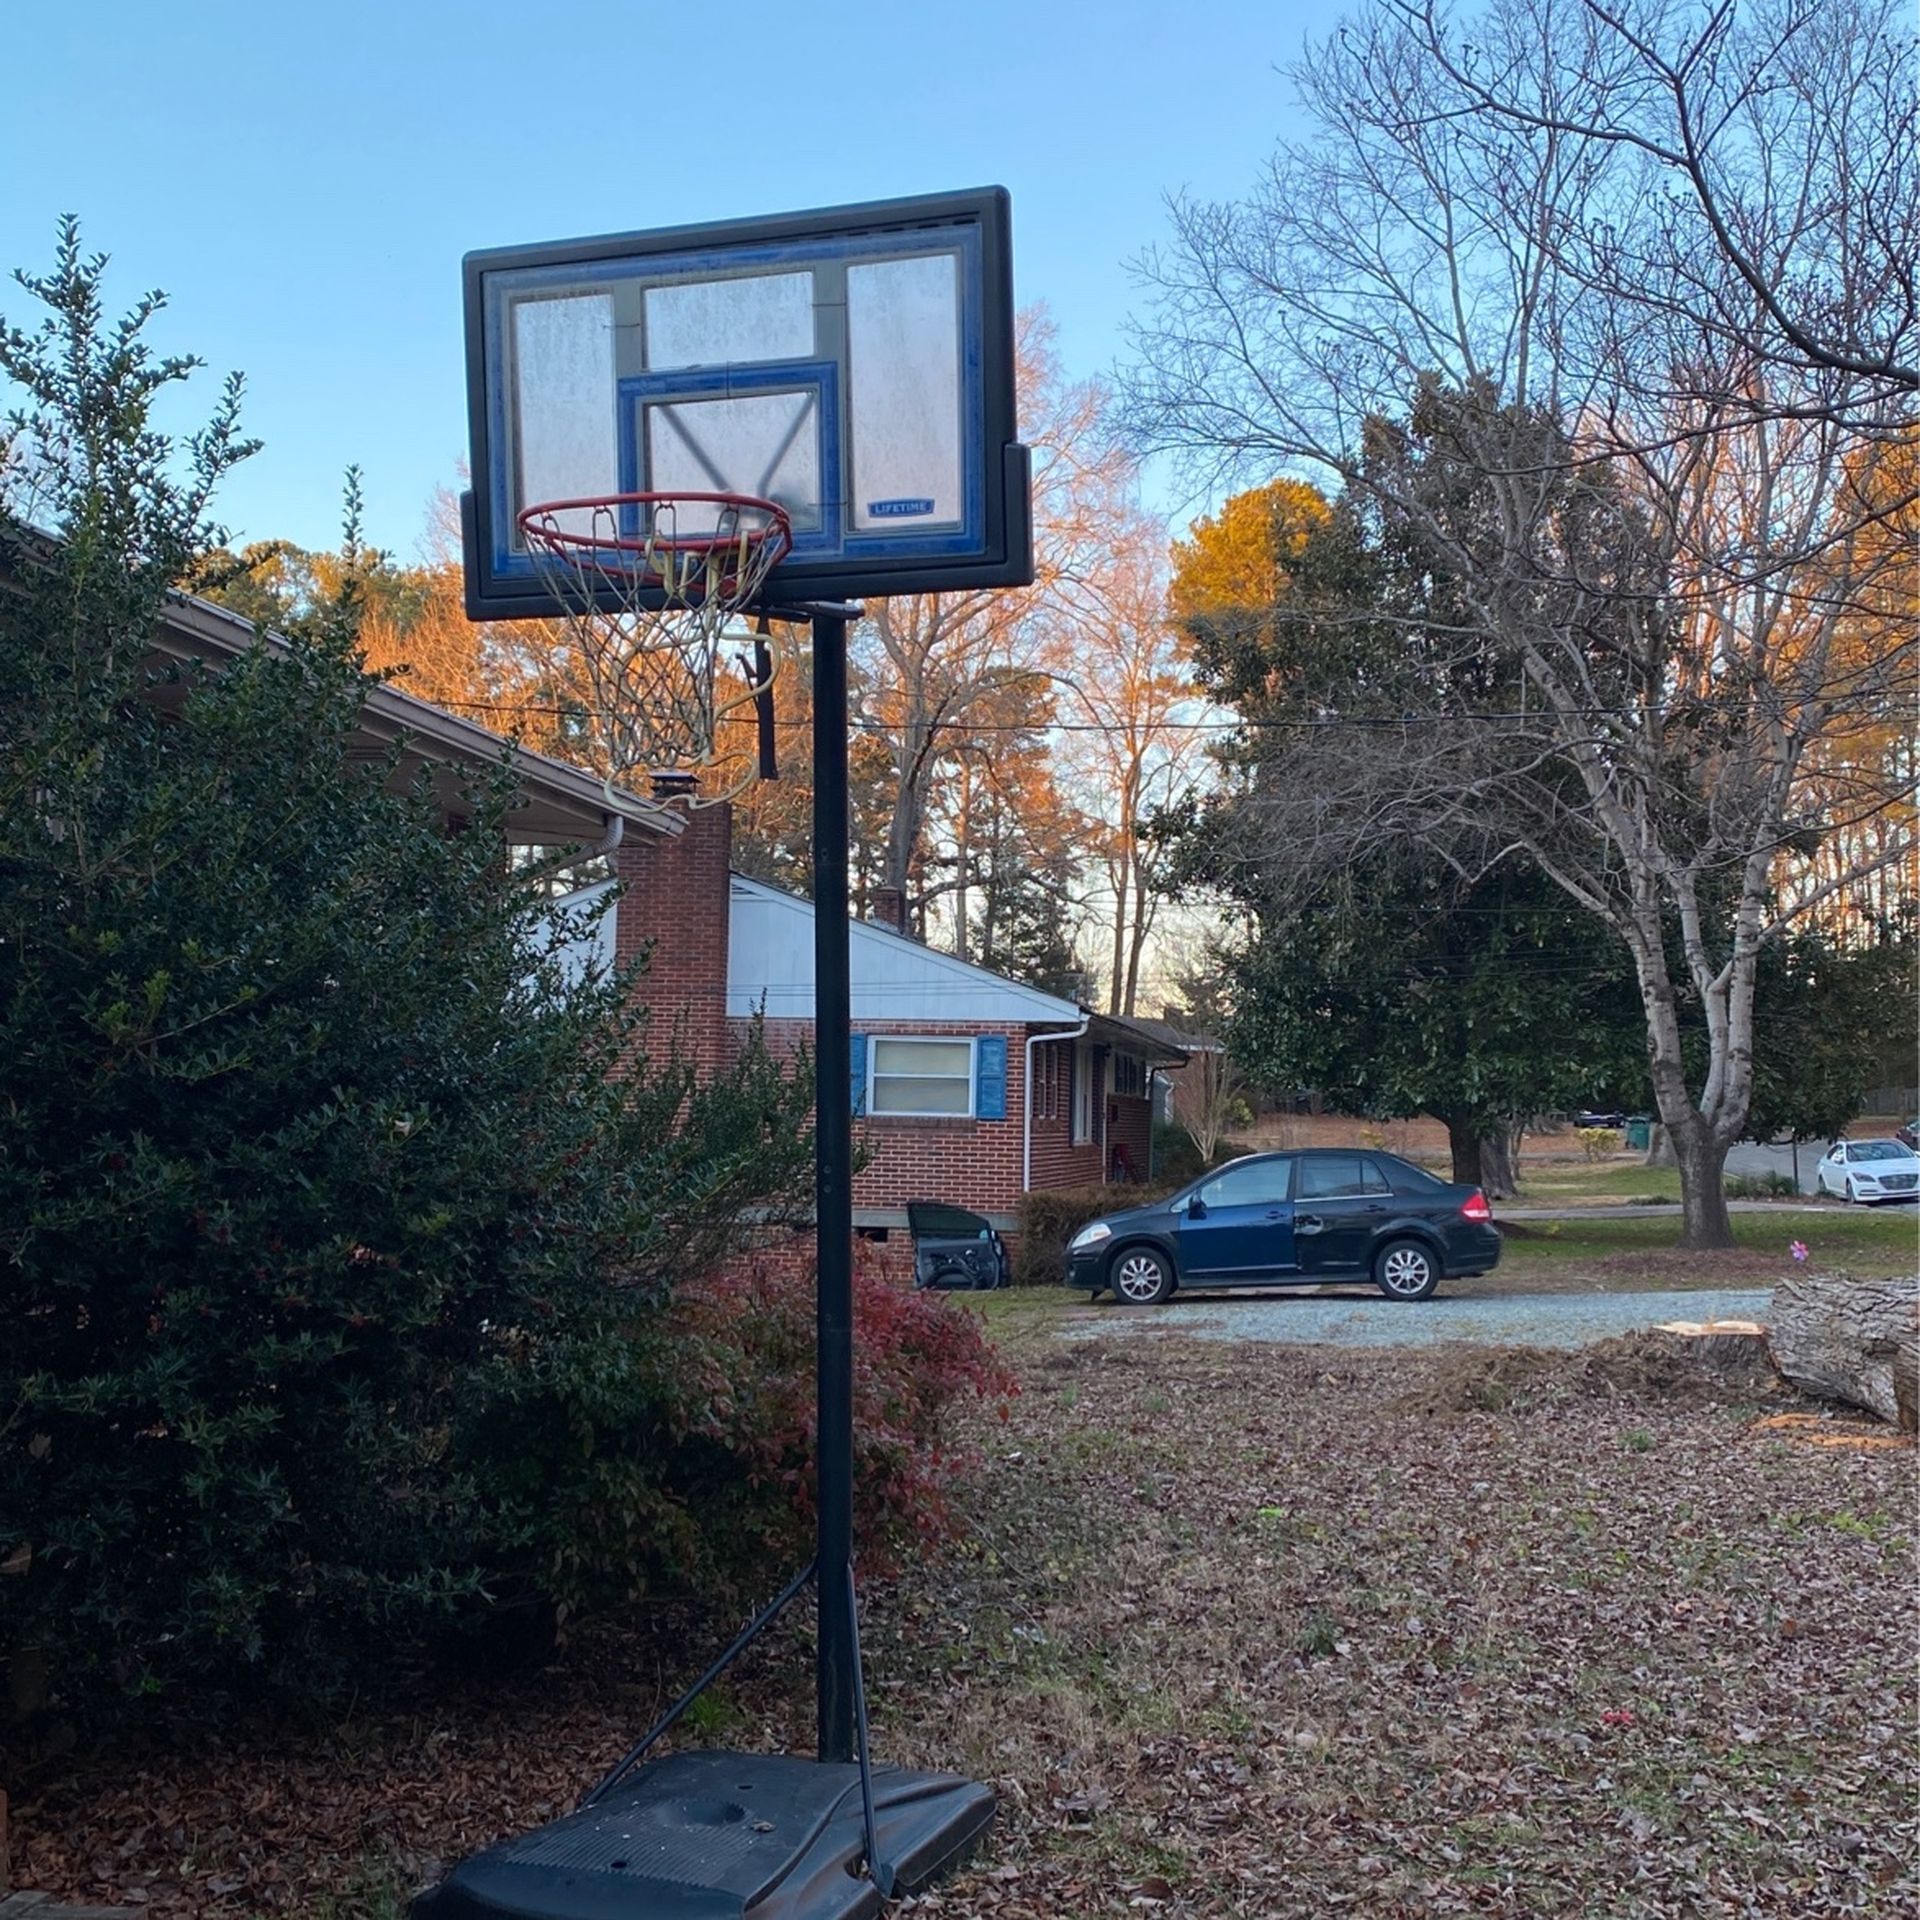 New Basketball Hoop